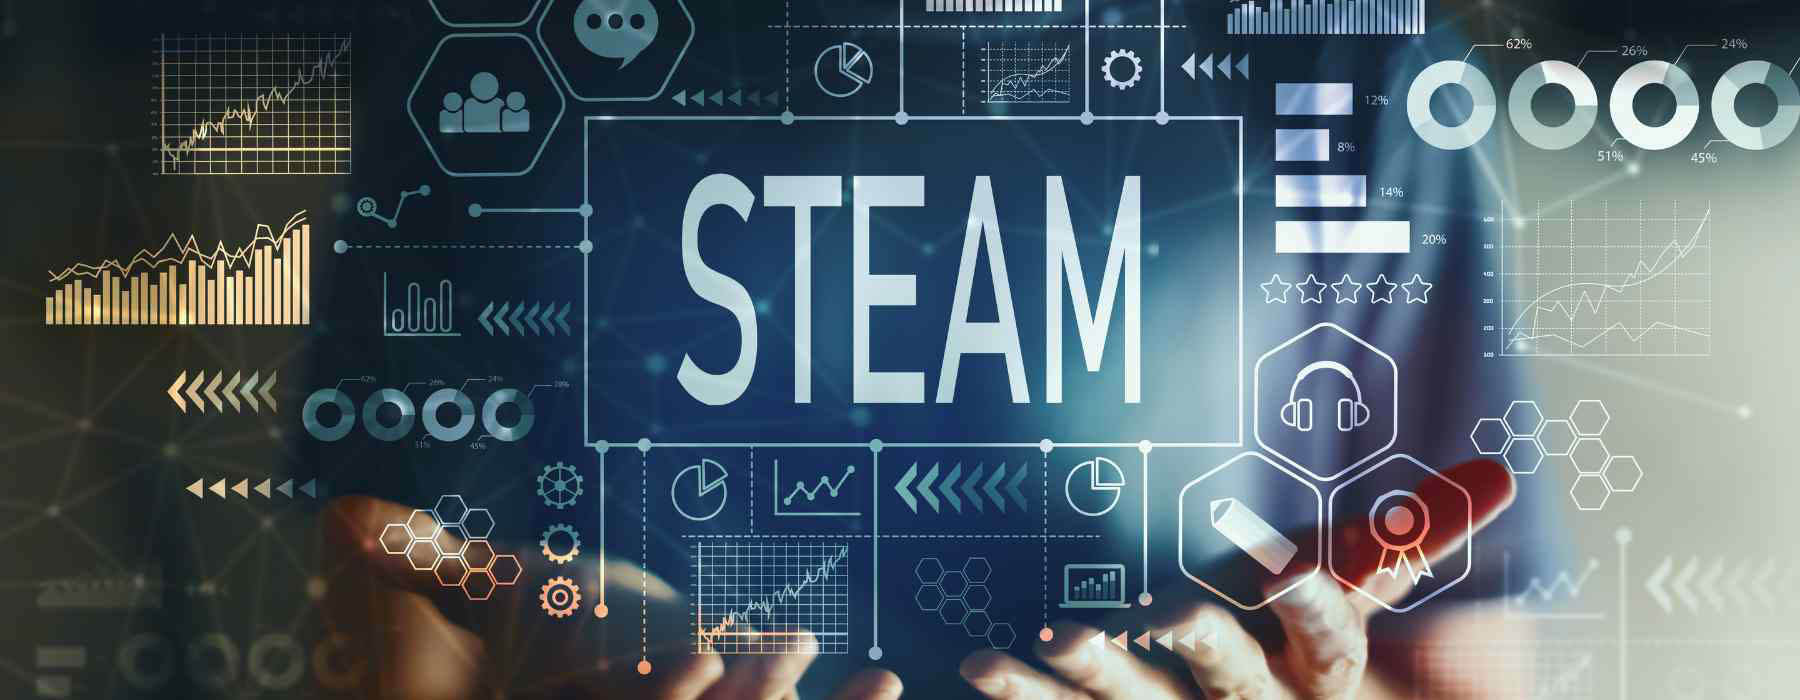 Full Steam Ahead Science Art Web Banner